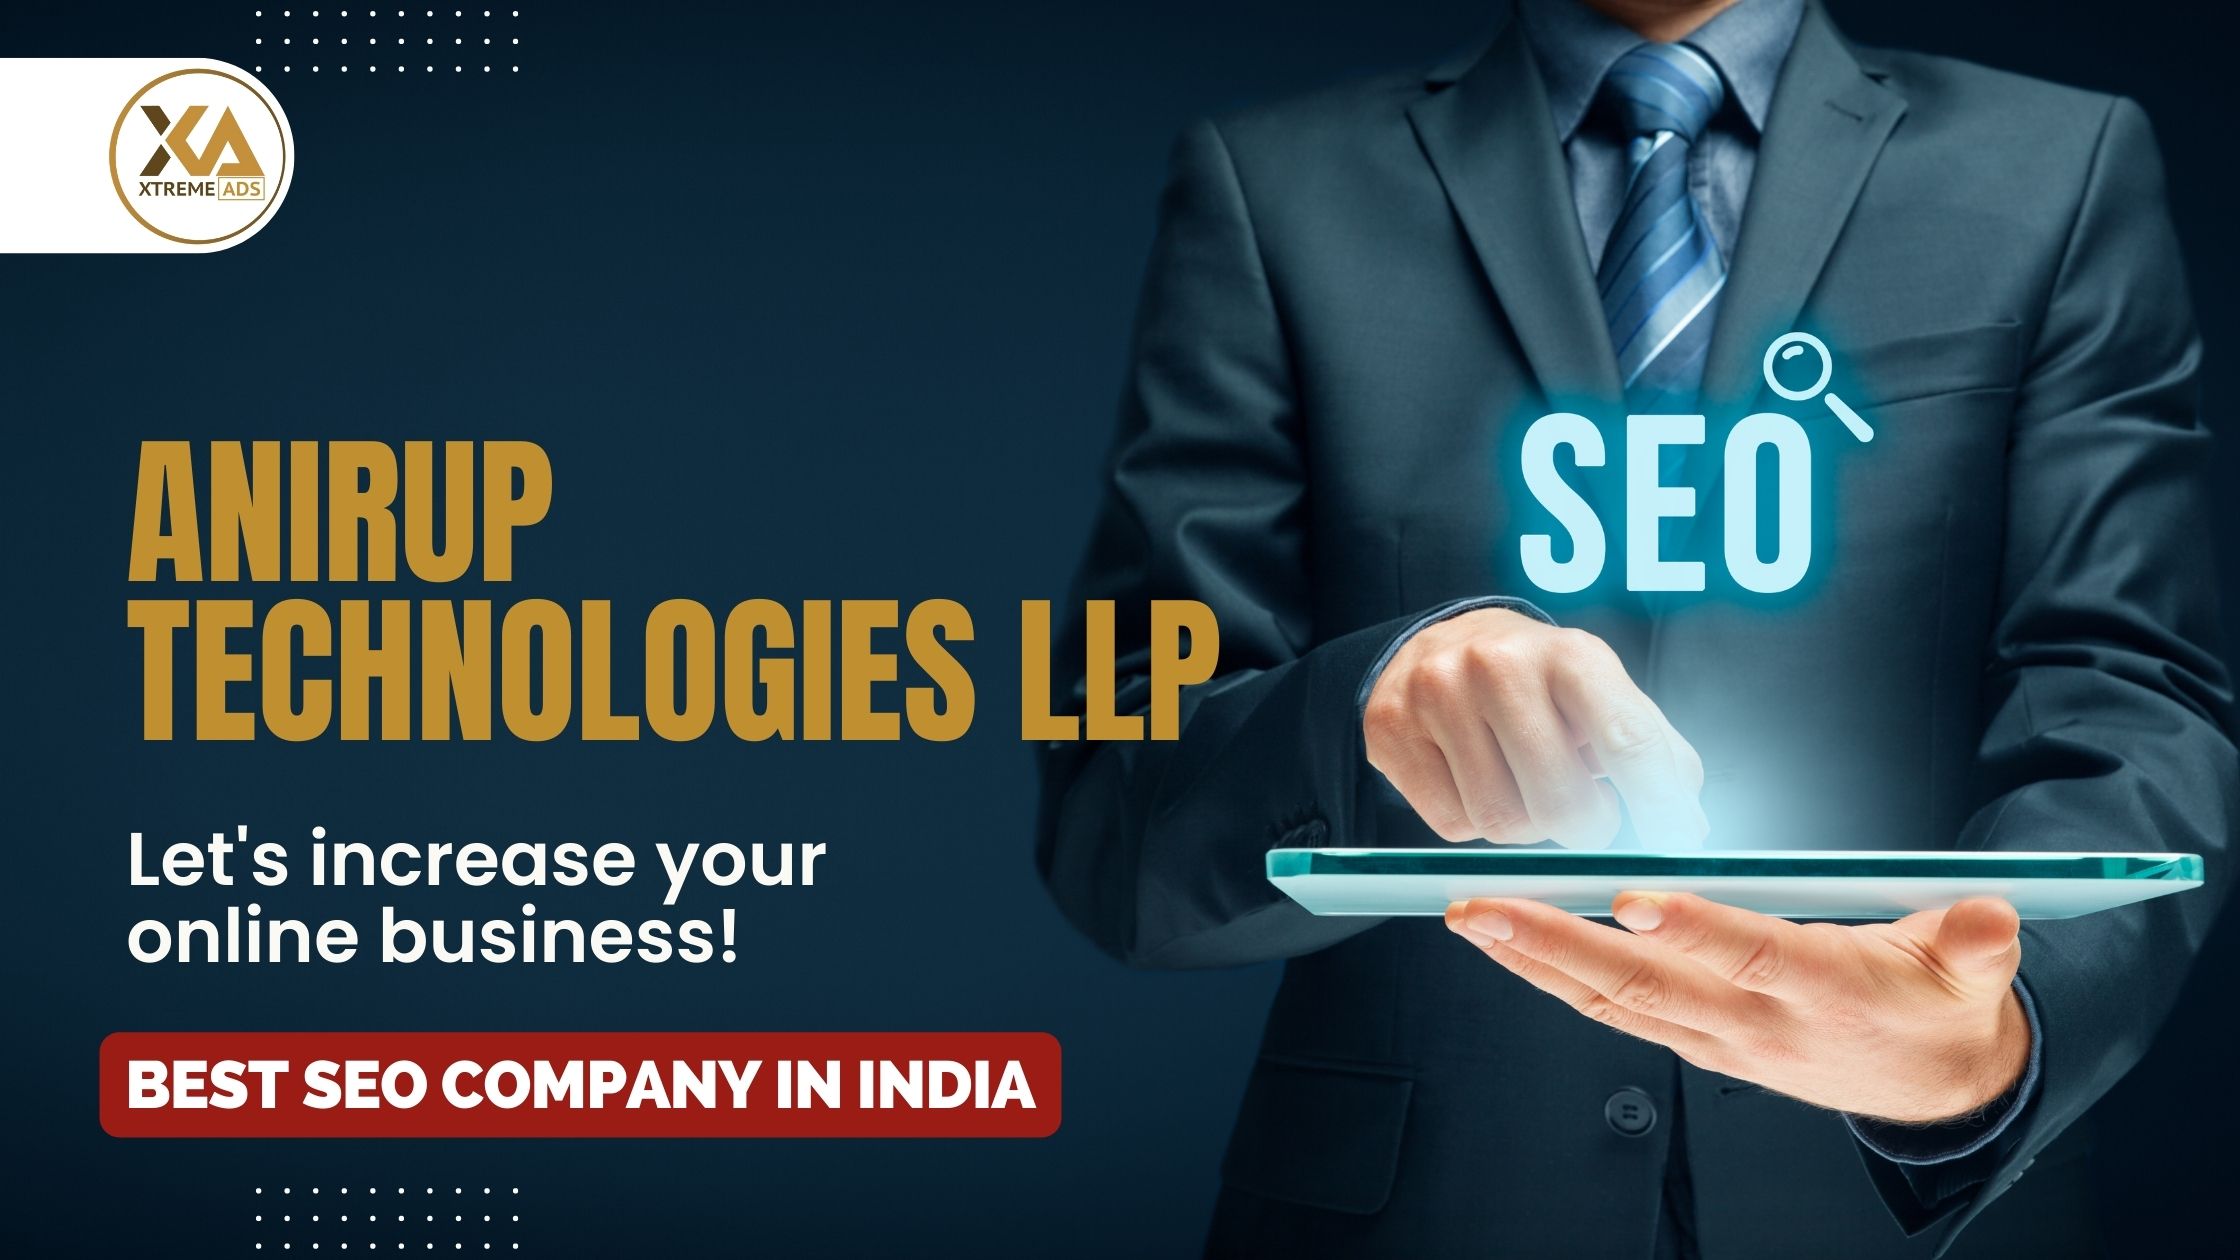 Top 10 SEO companies in India - Anirup Technologies